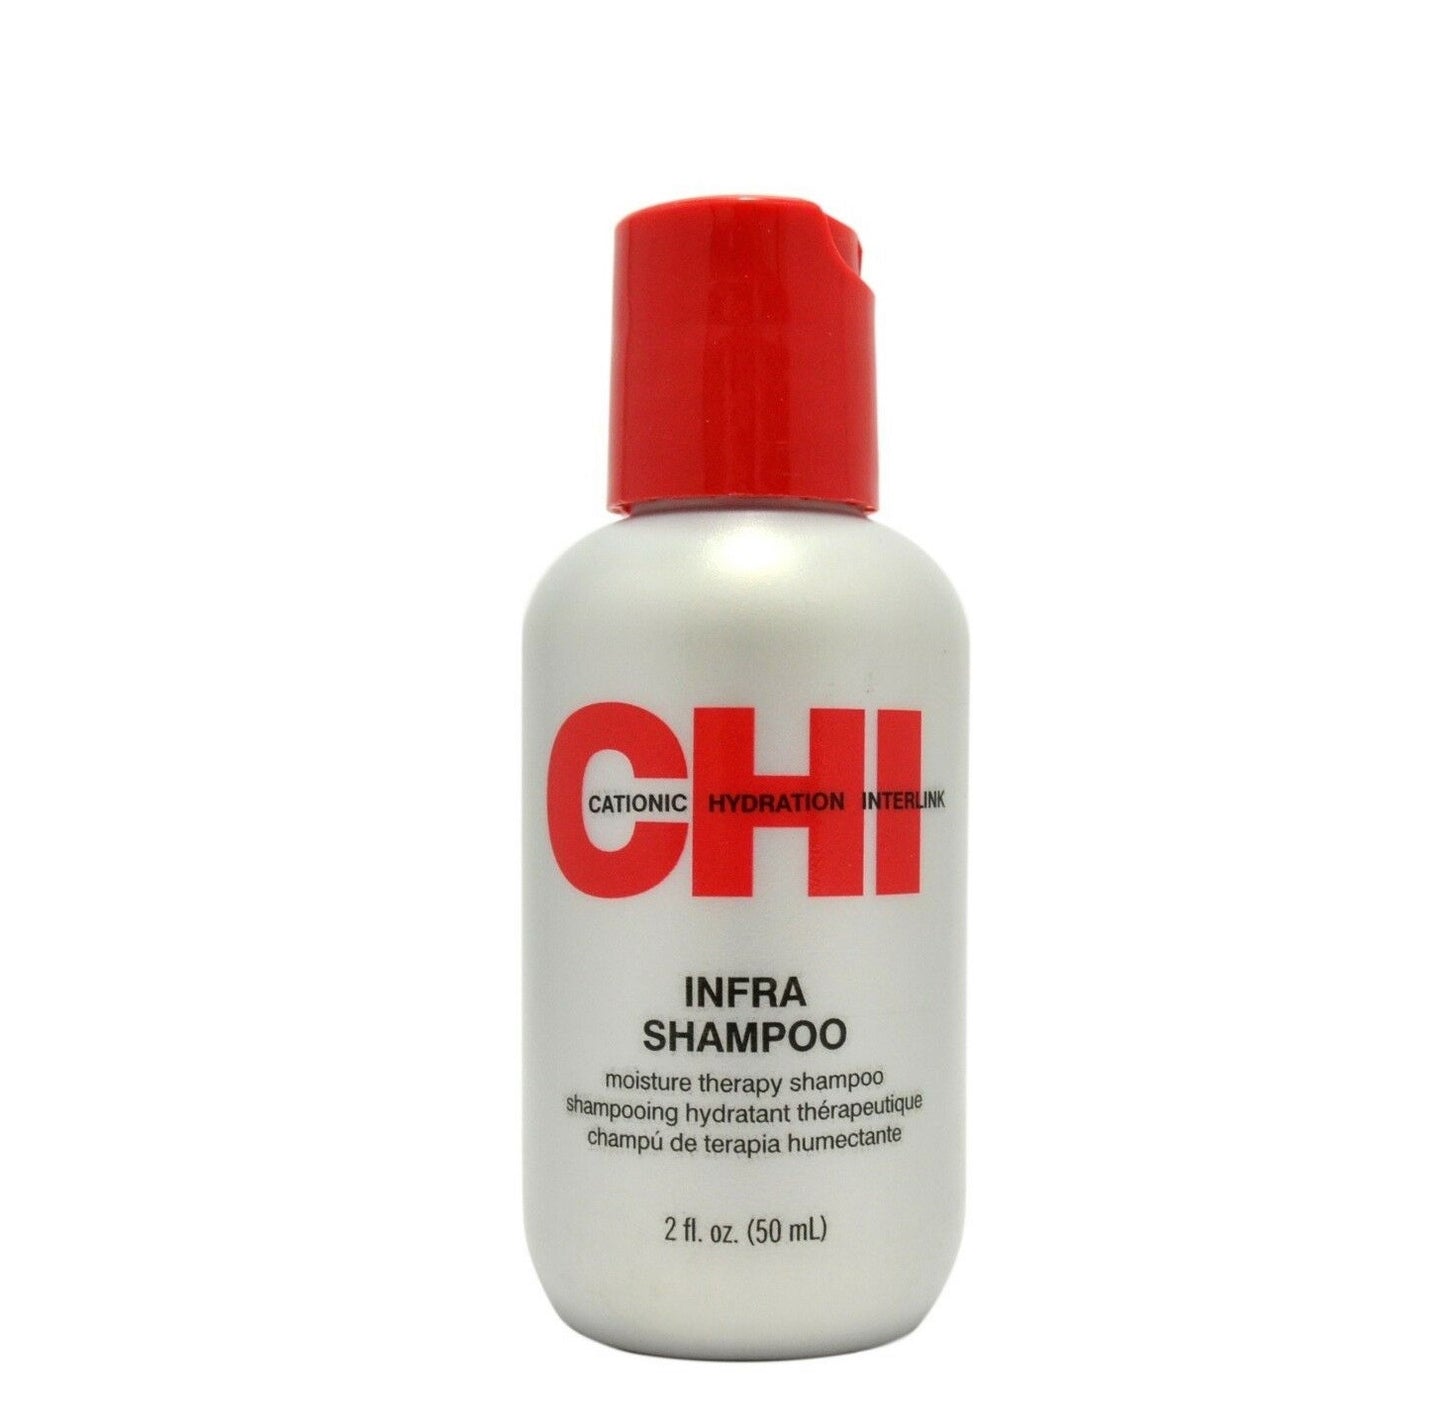 CHI Infra Shampoo - Moisture Therapy Shampoo